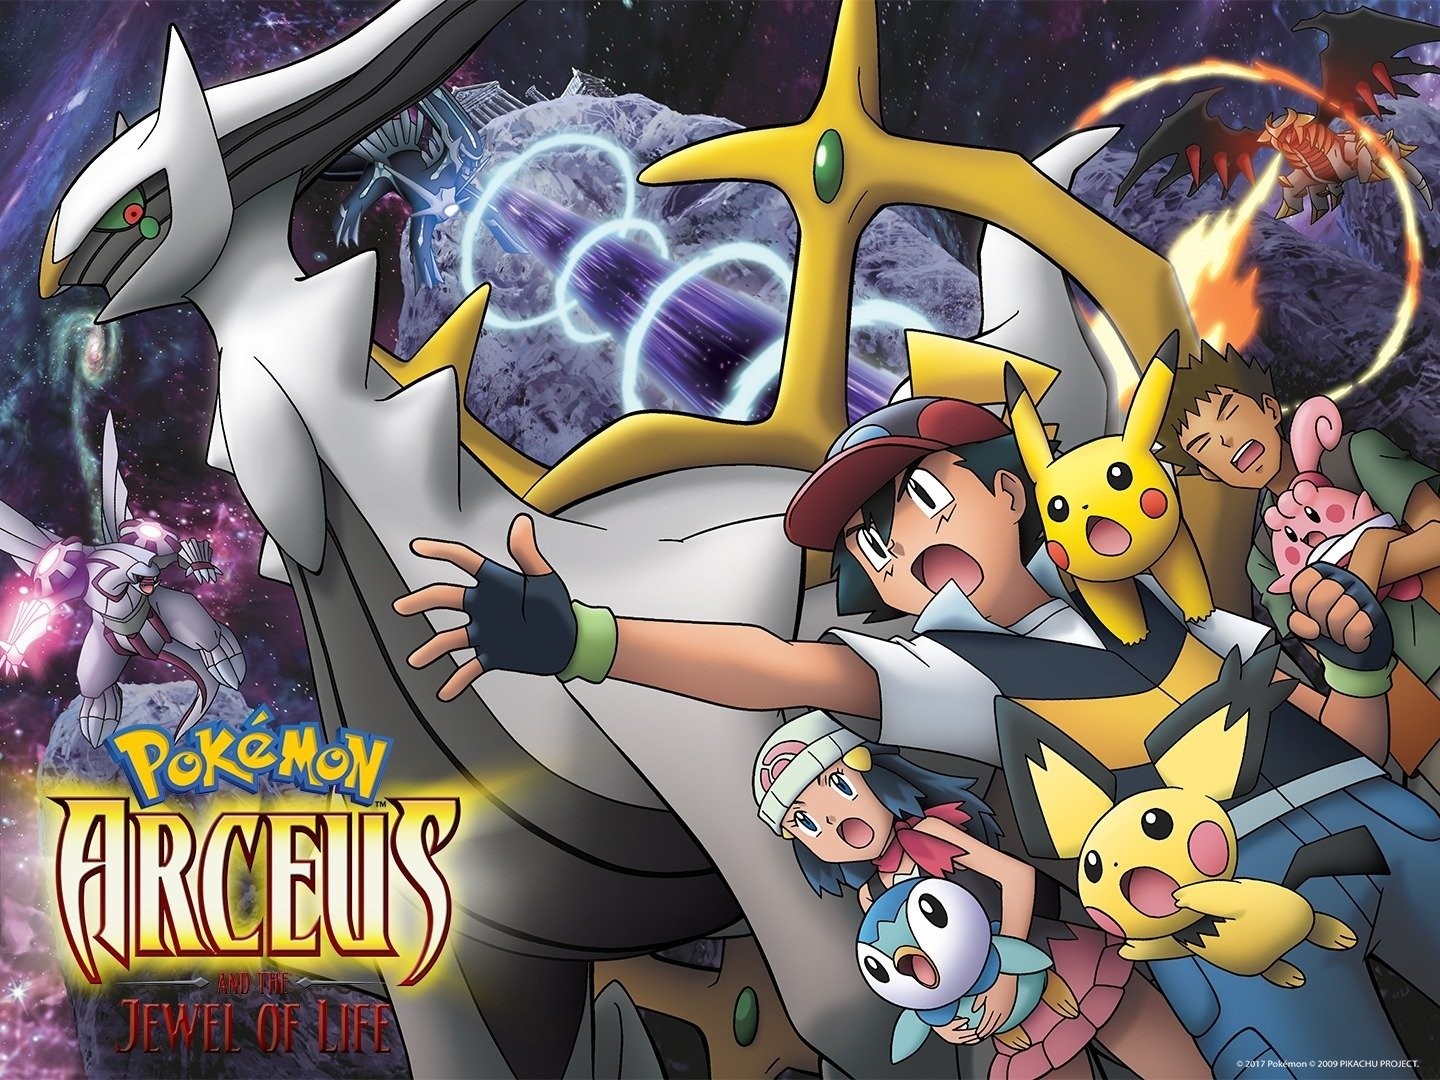 Pokémon: Arceus and the Jewel of Life - Rotten Tomatoes